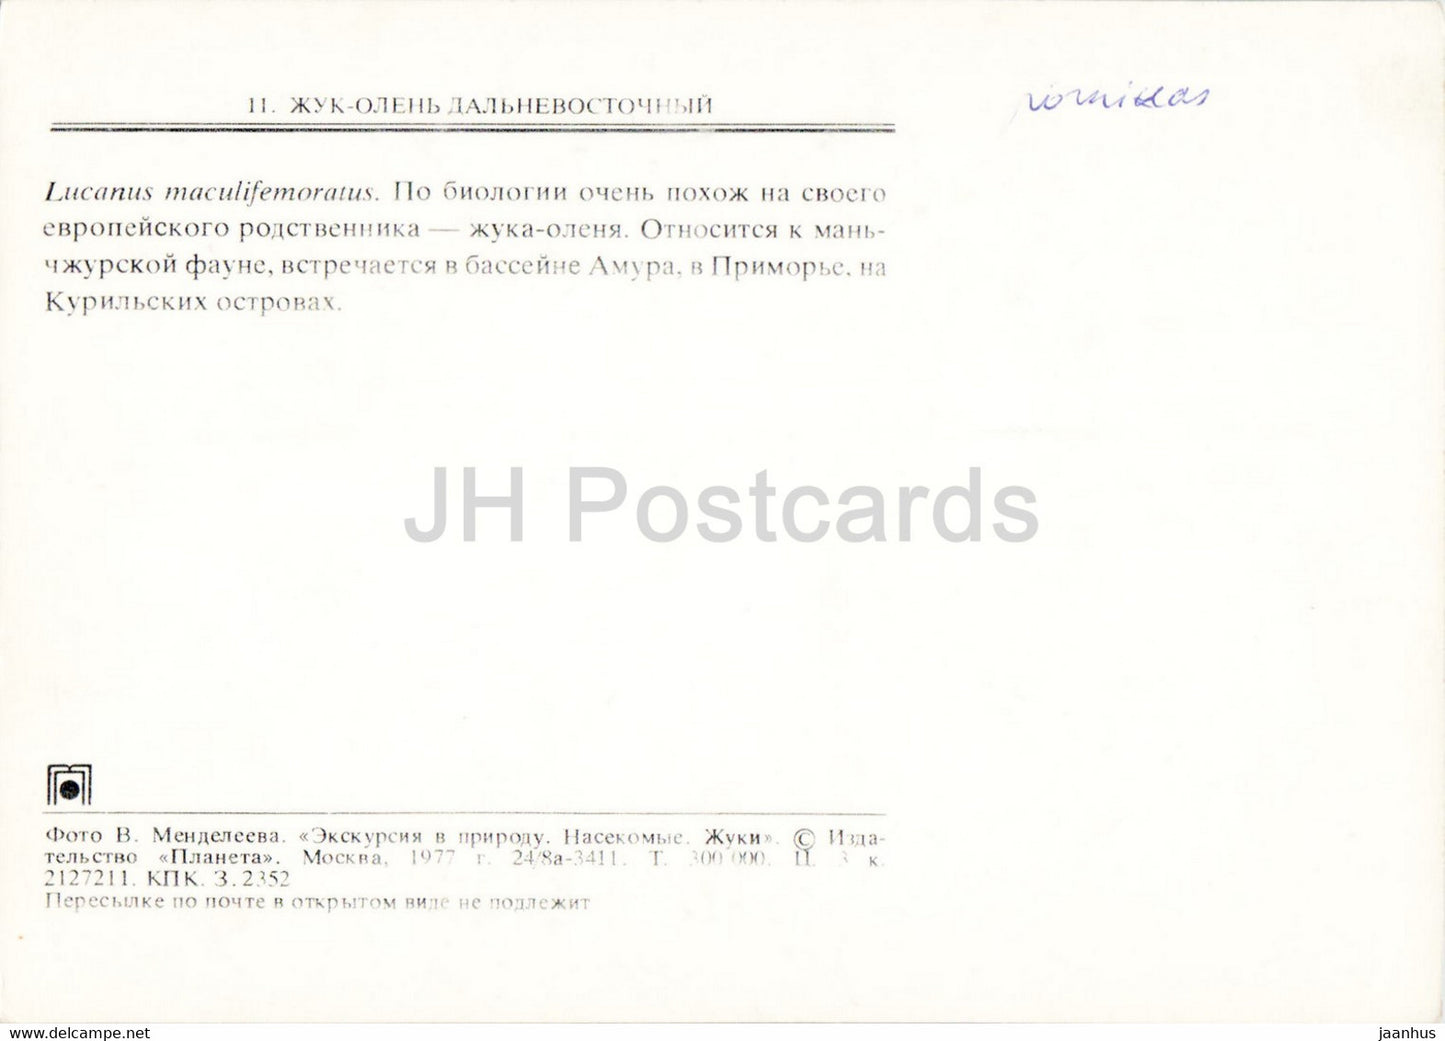 Miyama stag beetle - Lucanus maculifemoratus - insects - 1977 - Russia USSR - unused